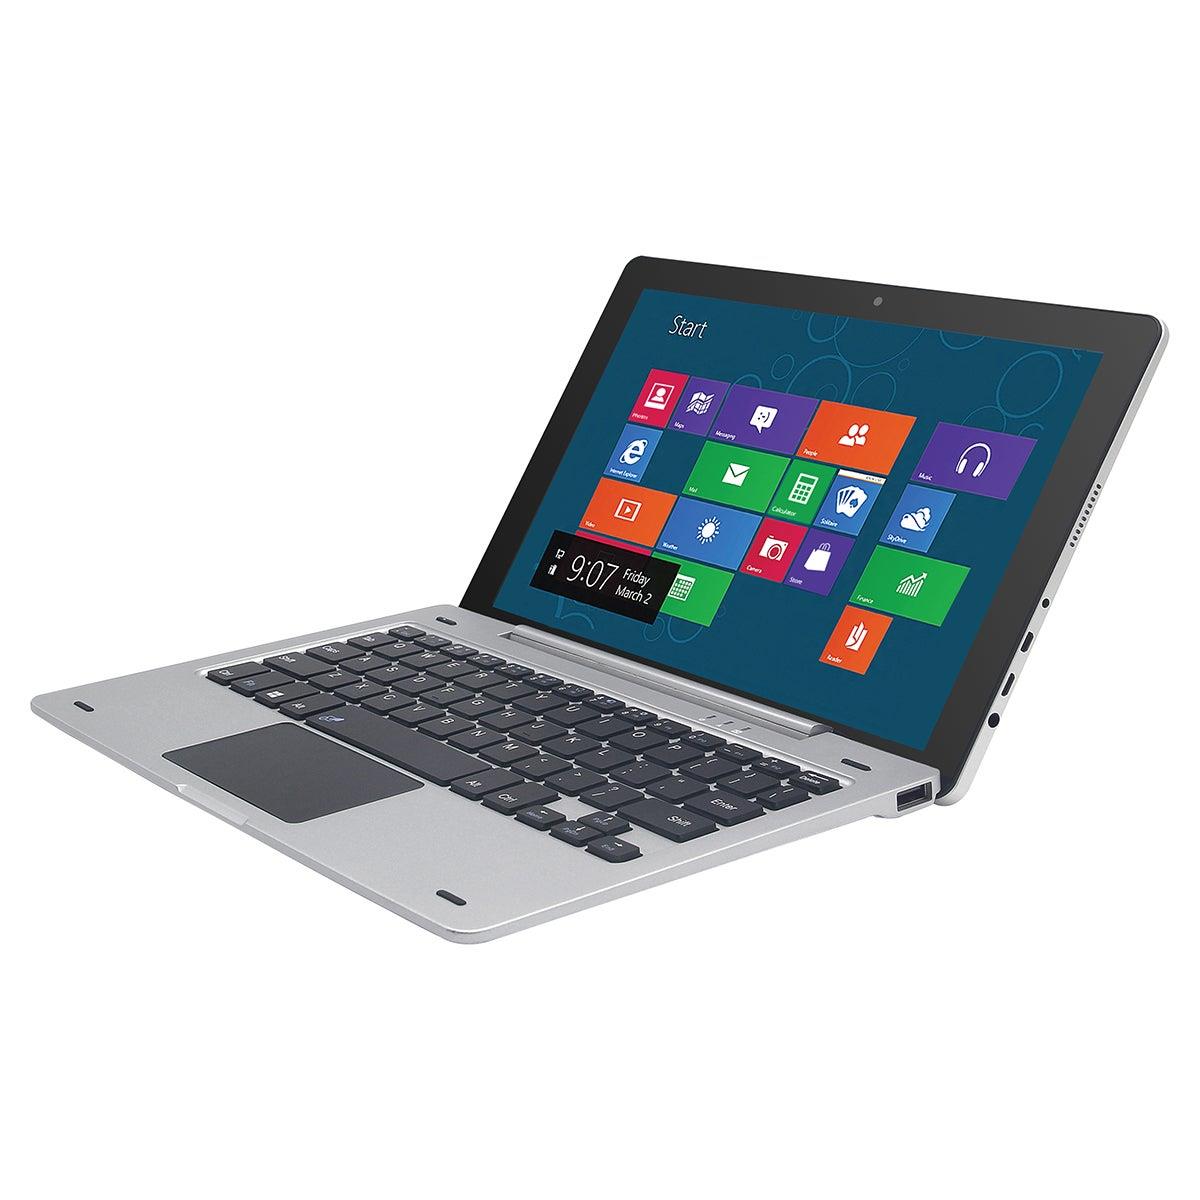 Tablets & Computers 10.1 Inch Netbook Laptop, Windows 10, Quad Core  Processor, 2gb Ram, 32gb ROM, Webcam, USB 3.0, HDMI, SD Card Slot,  Bluetooth